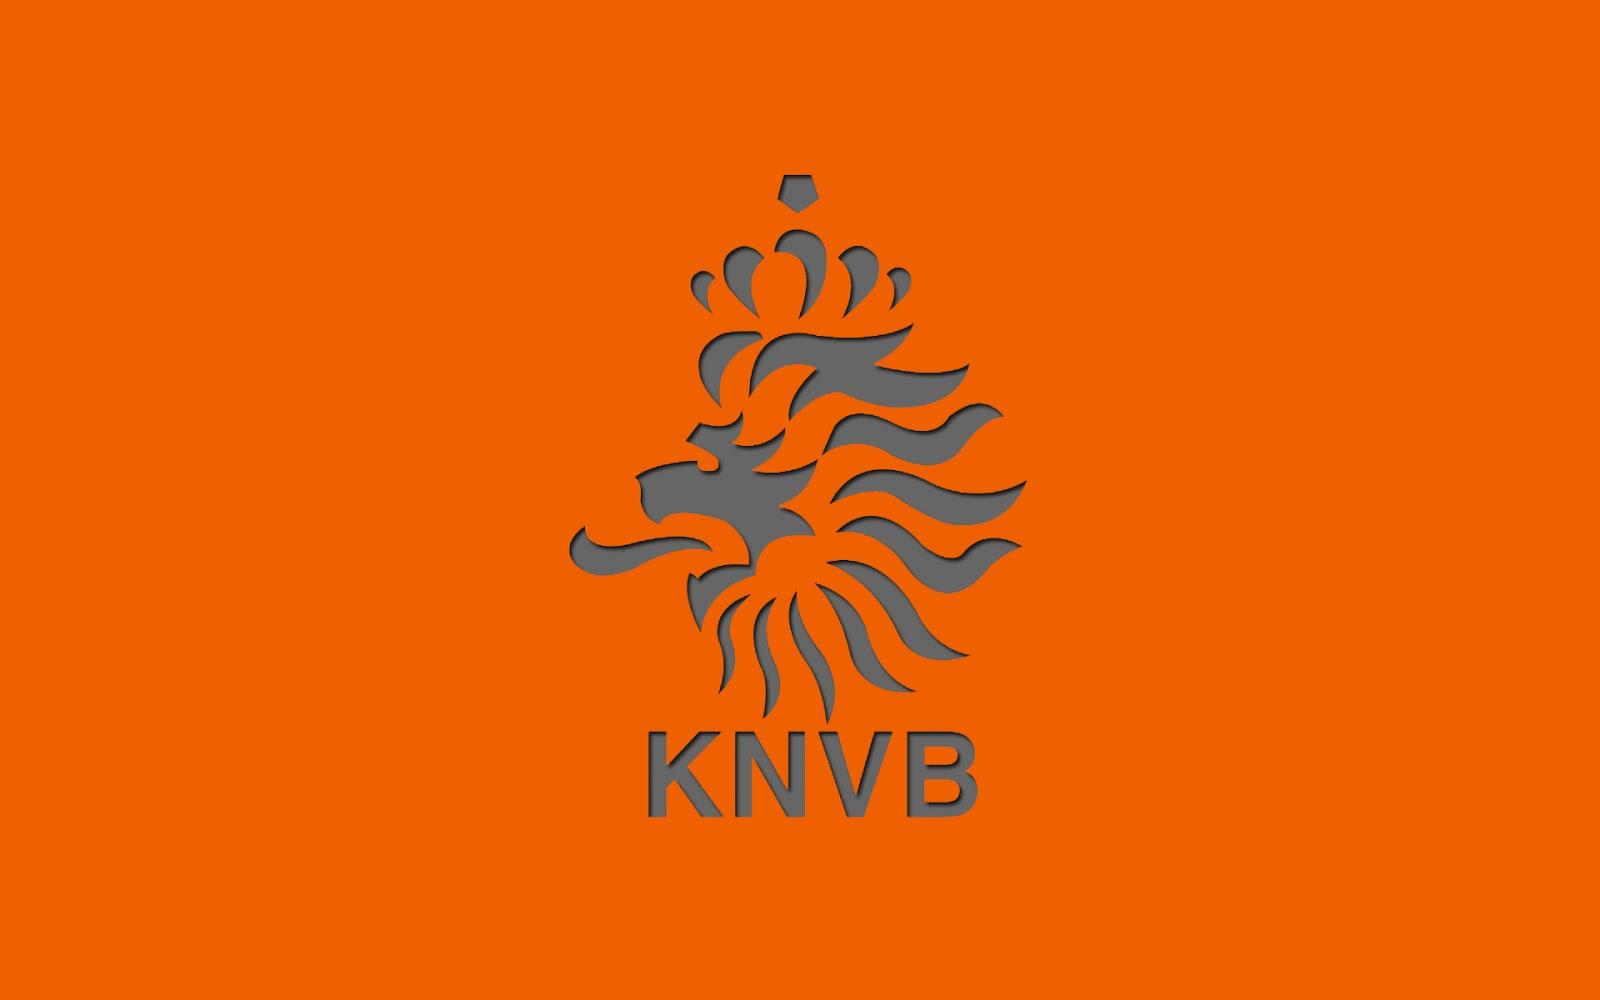 Netherlands National Football Team Wallpapers - Wallpaper Cave